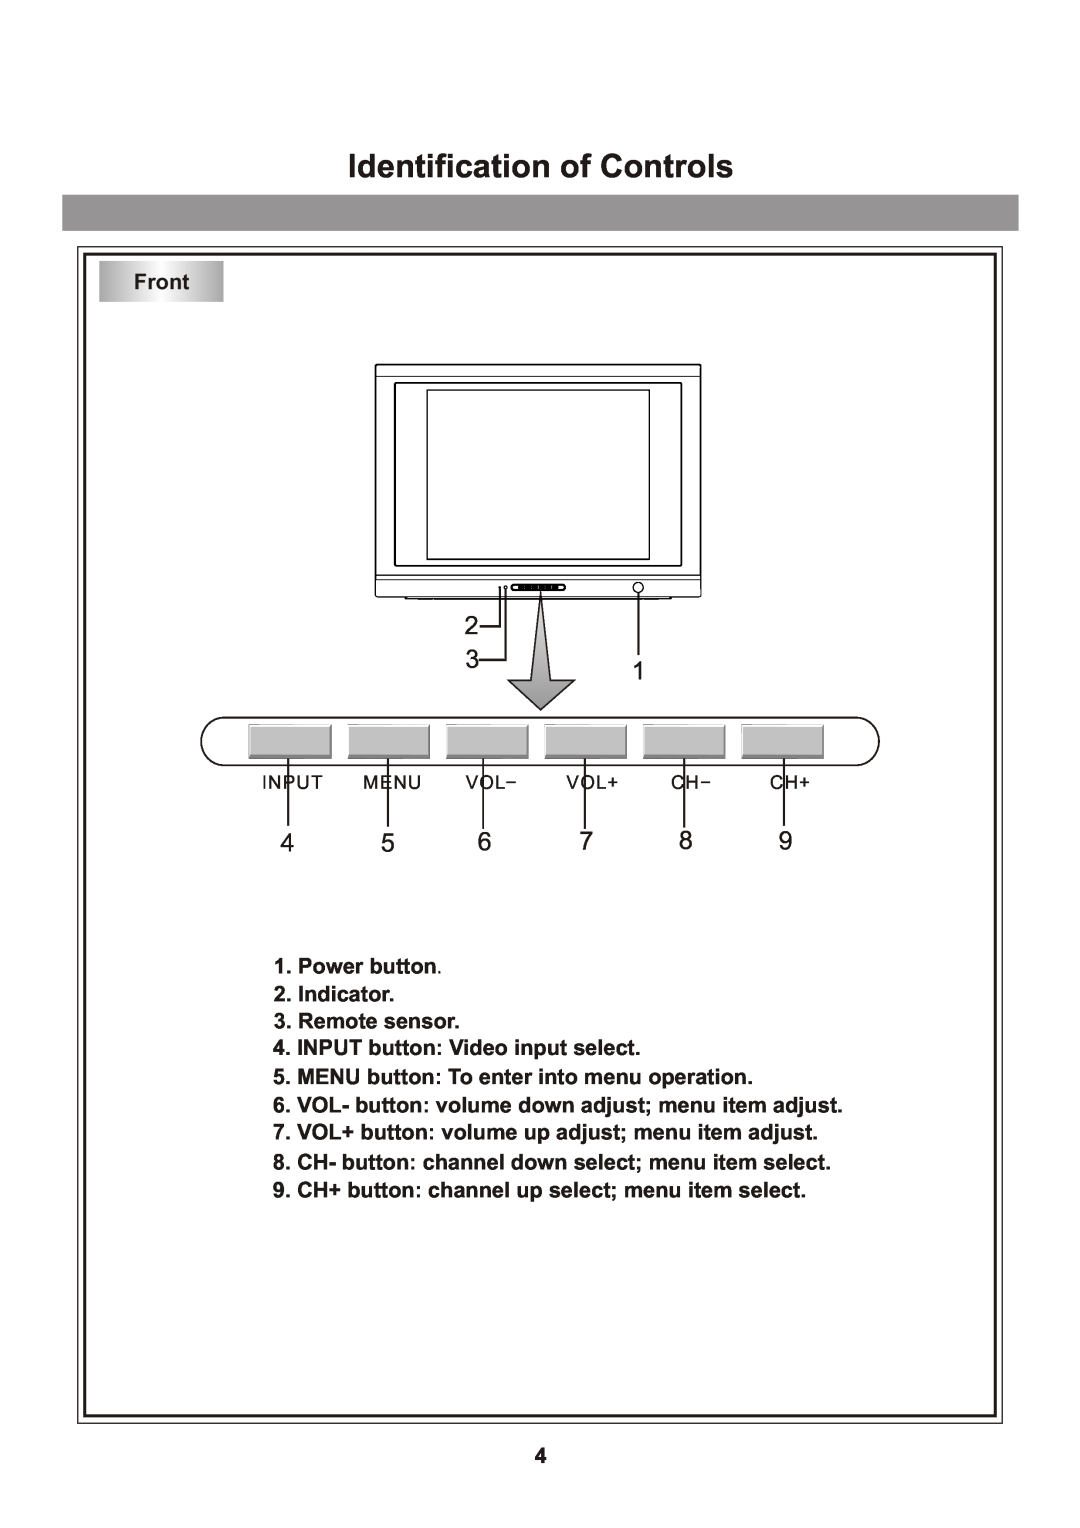 Memorex Flat Screen Tv manual Identification of Controls, Front, Power button 2. Indicator 3. Remote sensor 